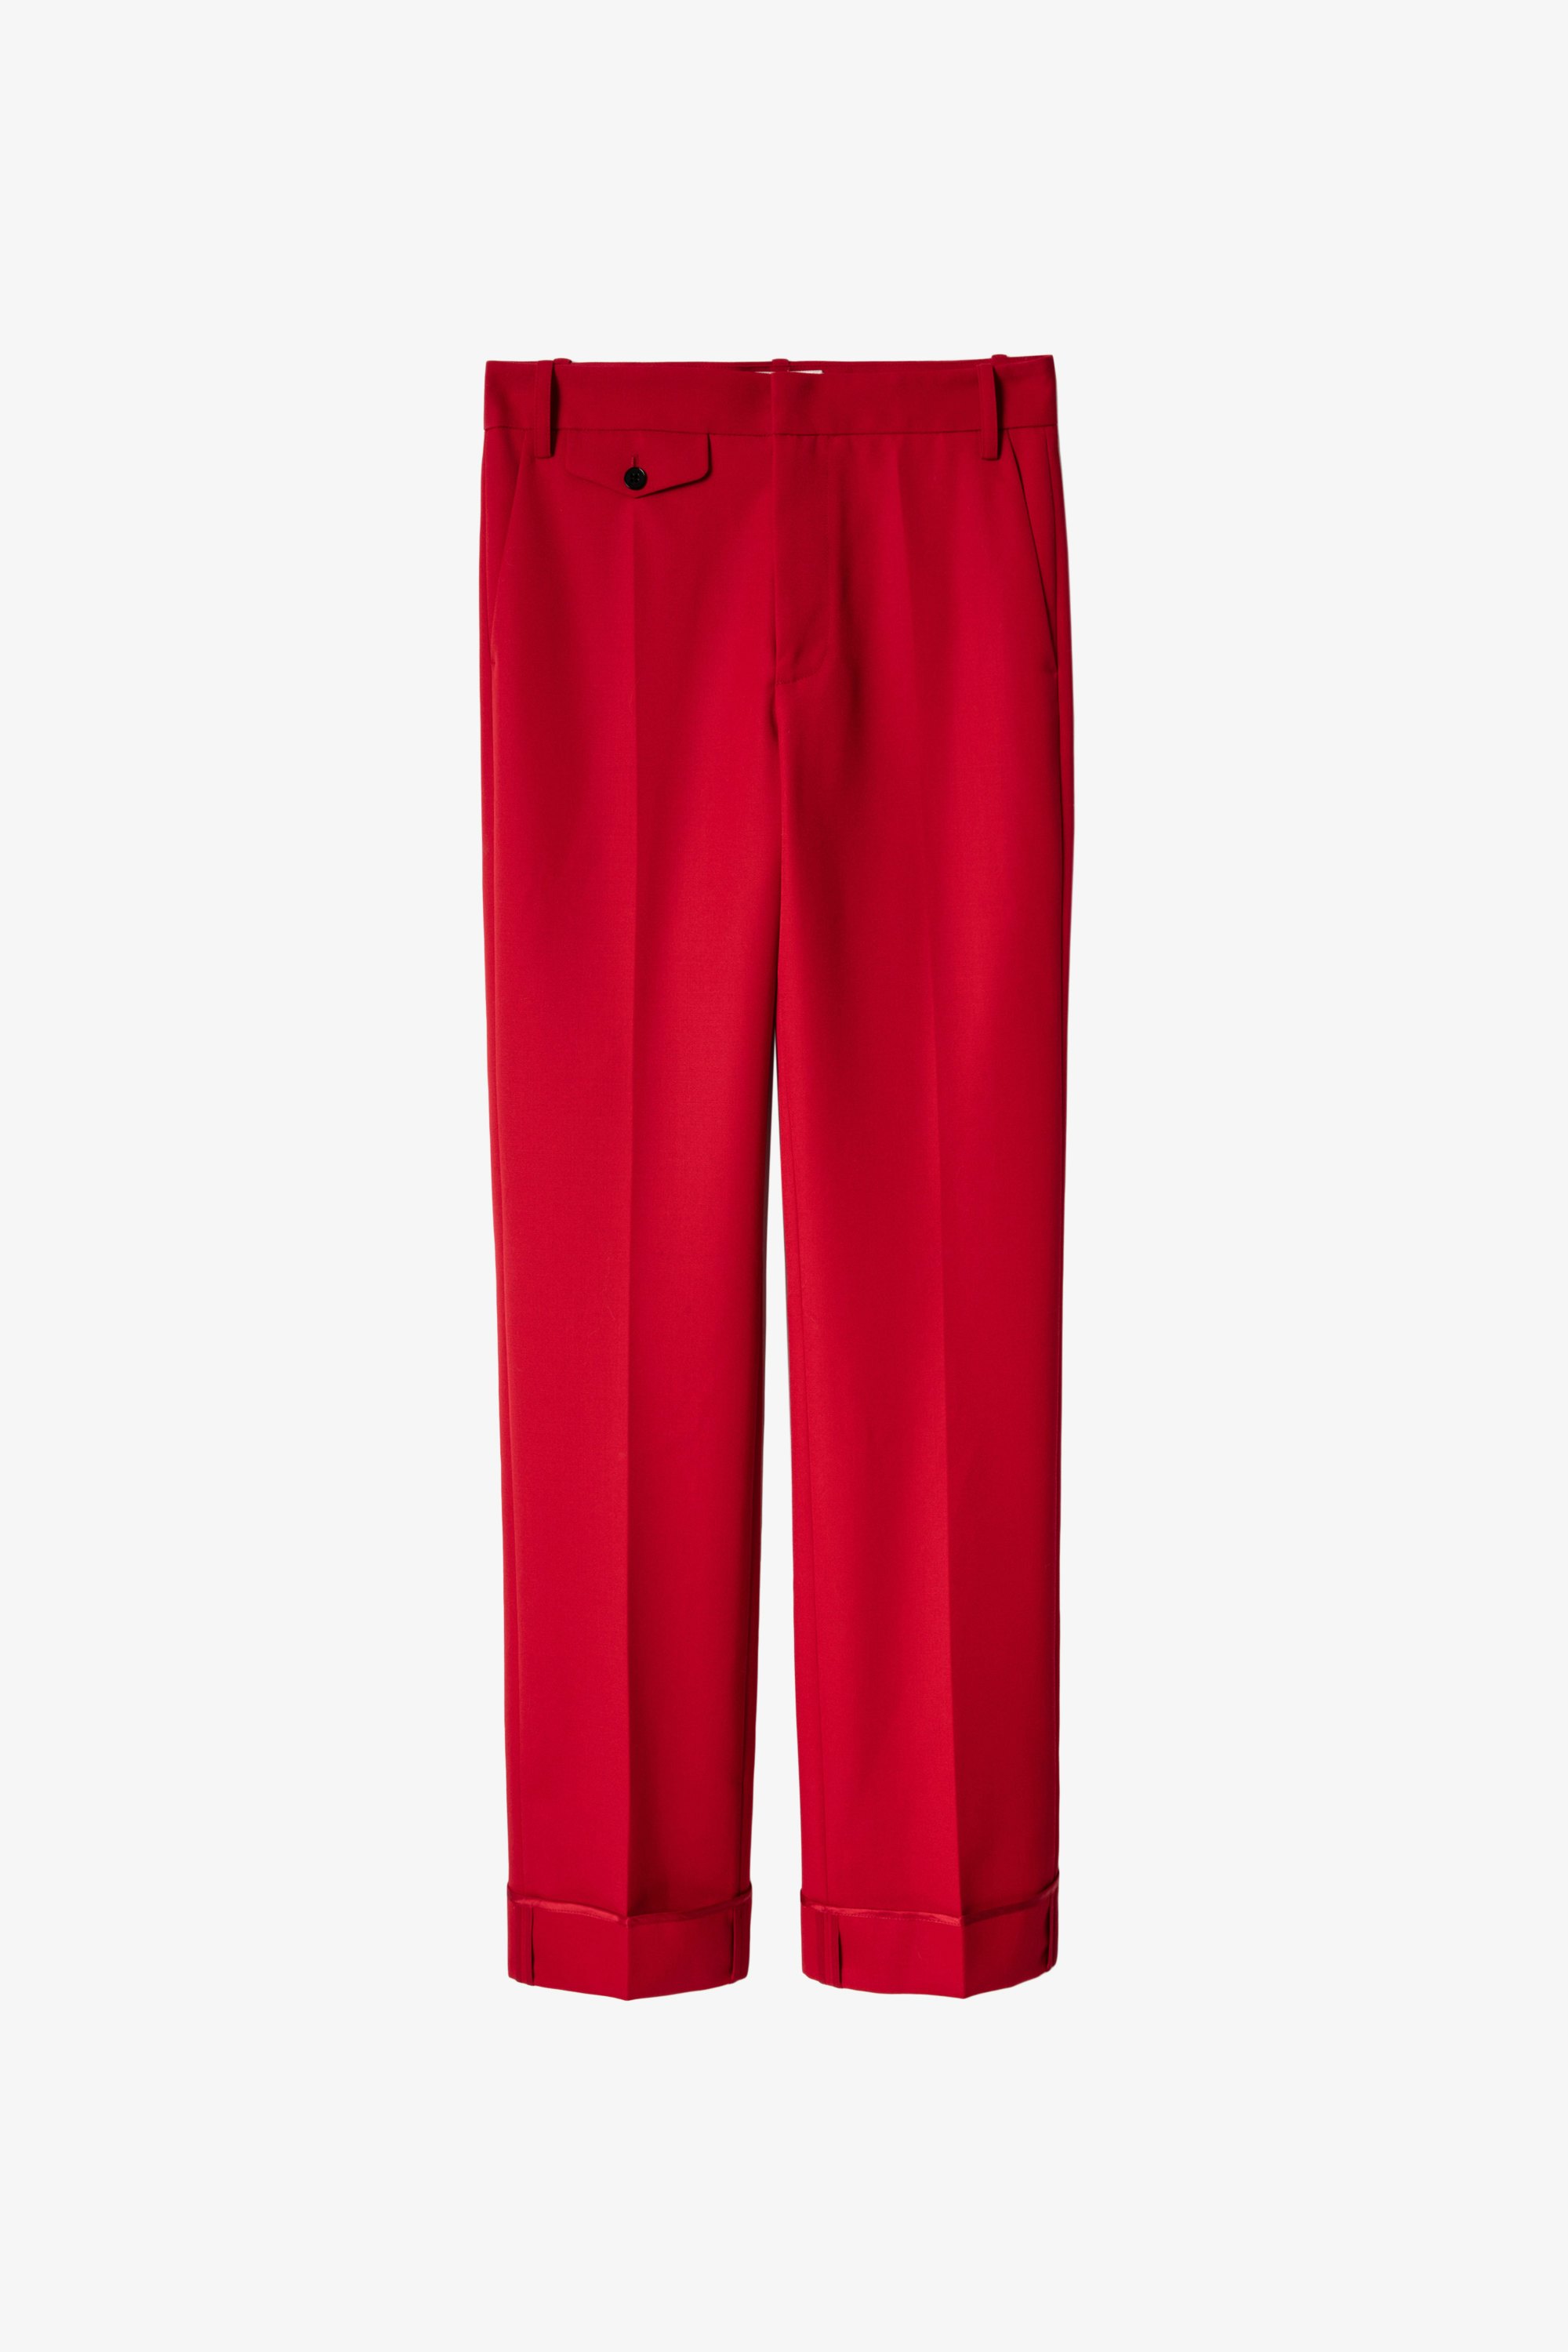 Pantaloni Poetia Pantaloni in gabardine rossa donna